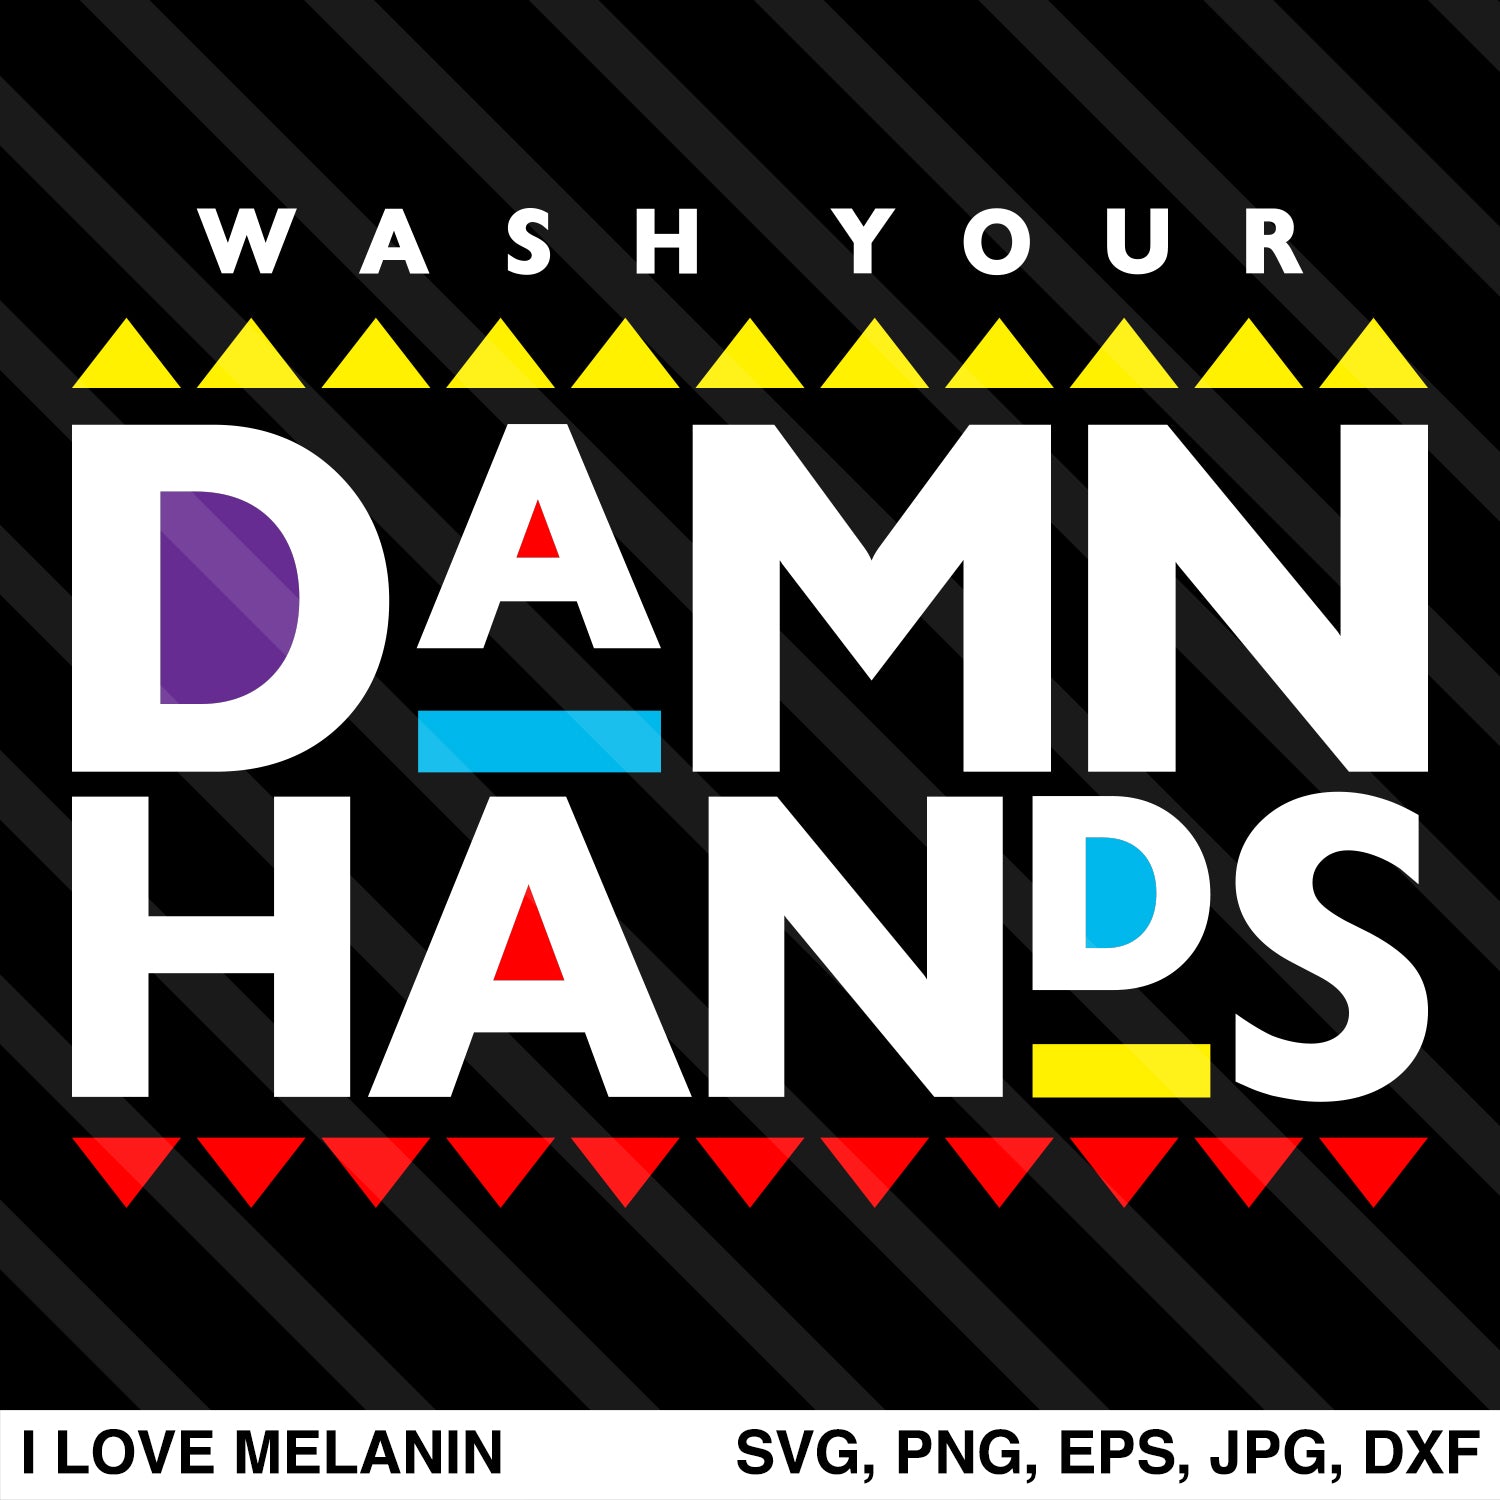 Wash Your Damn Hands SVG - I Love Melanin